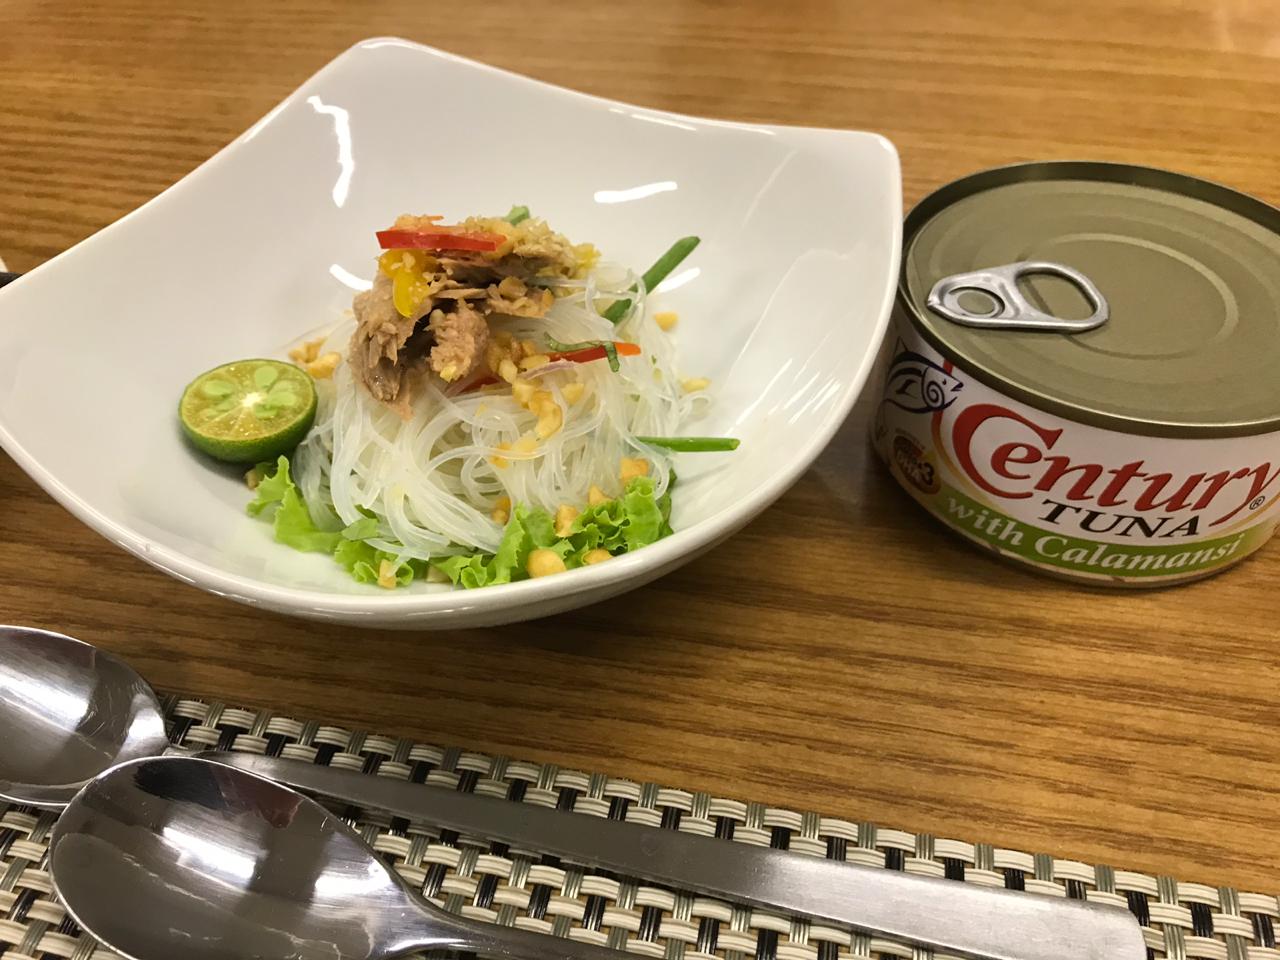 Century Tuna Calamansi Glass Noodle Salad